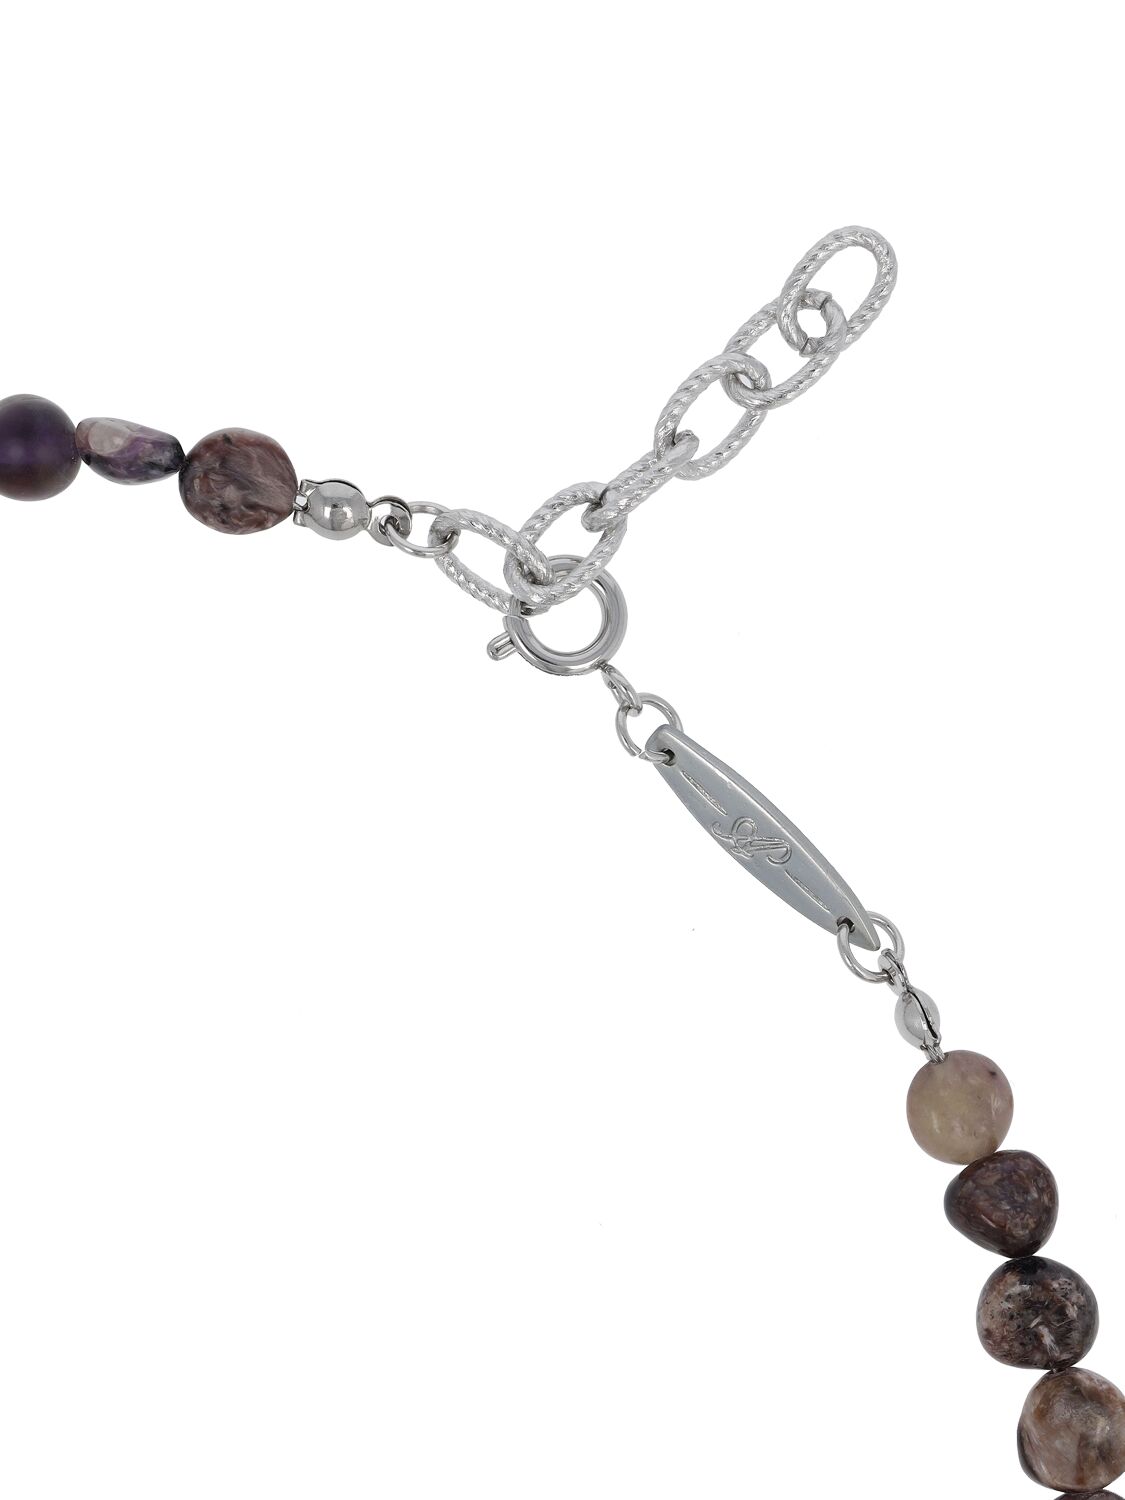 Shop After Pray Ocean Gemstone Necklace In Purple